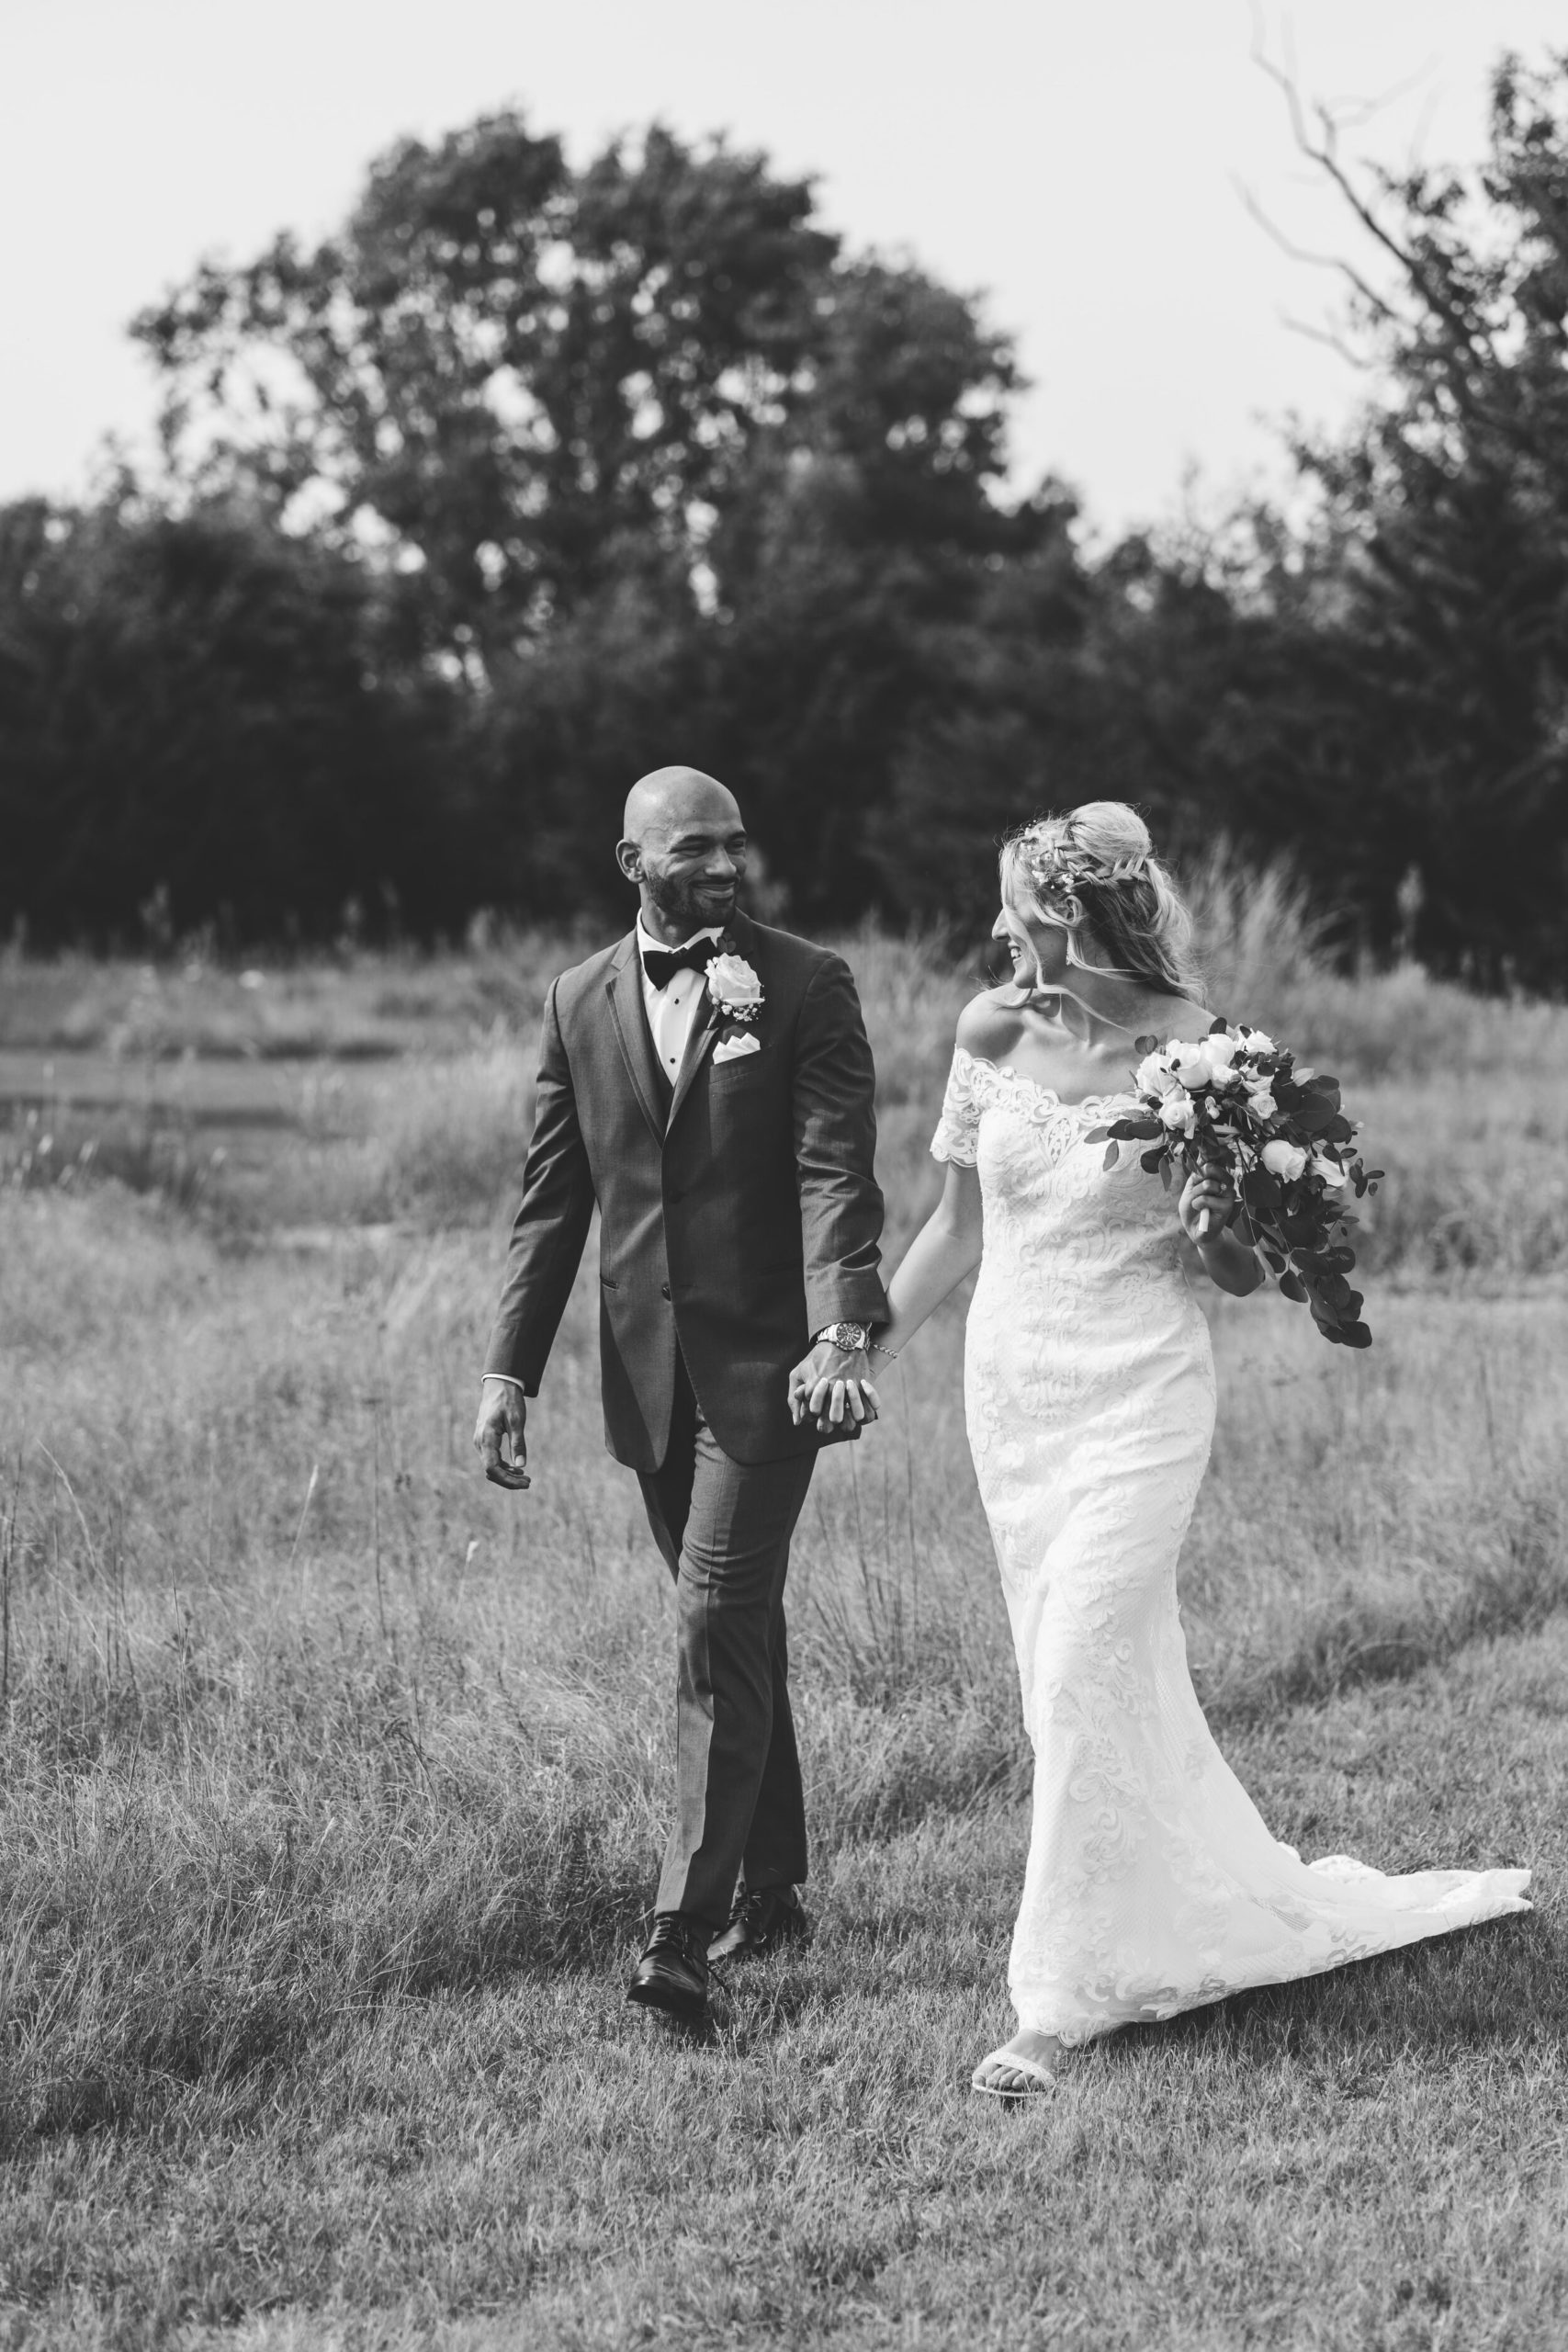 Hayley + Lorenzo - Summer White Chapel Wedding at Stone Hill Barn in Augusta, Kansas113.jpg